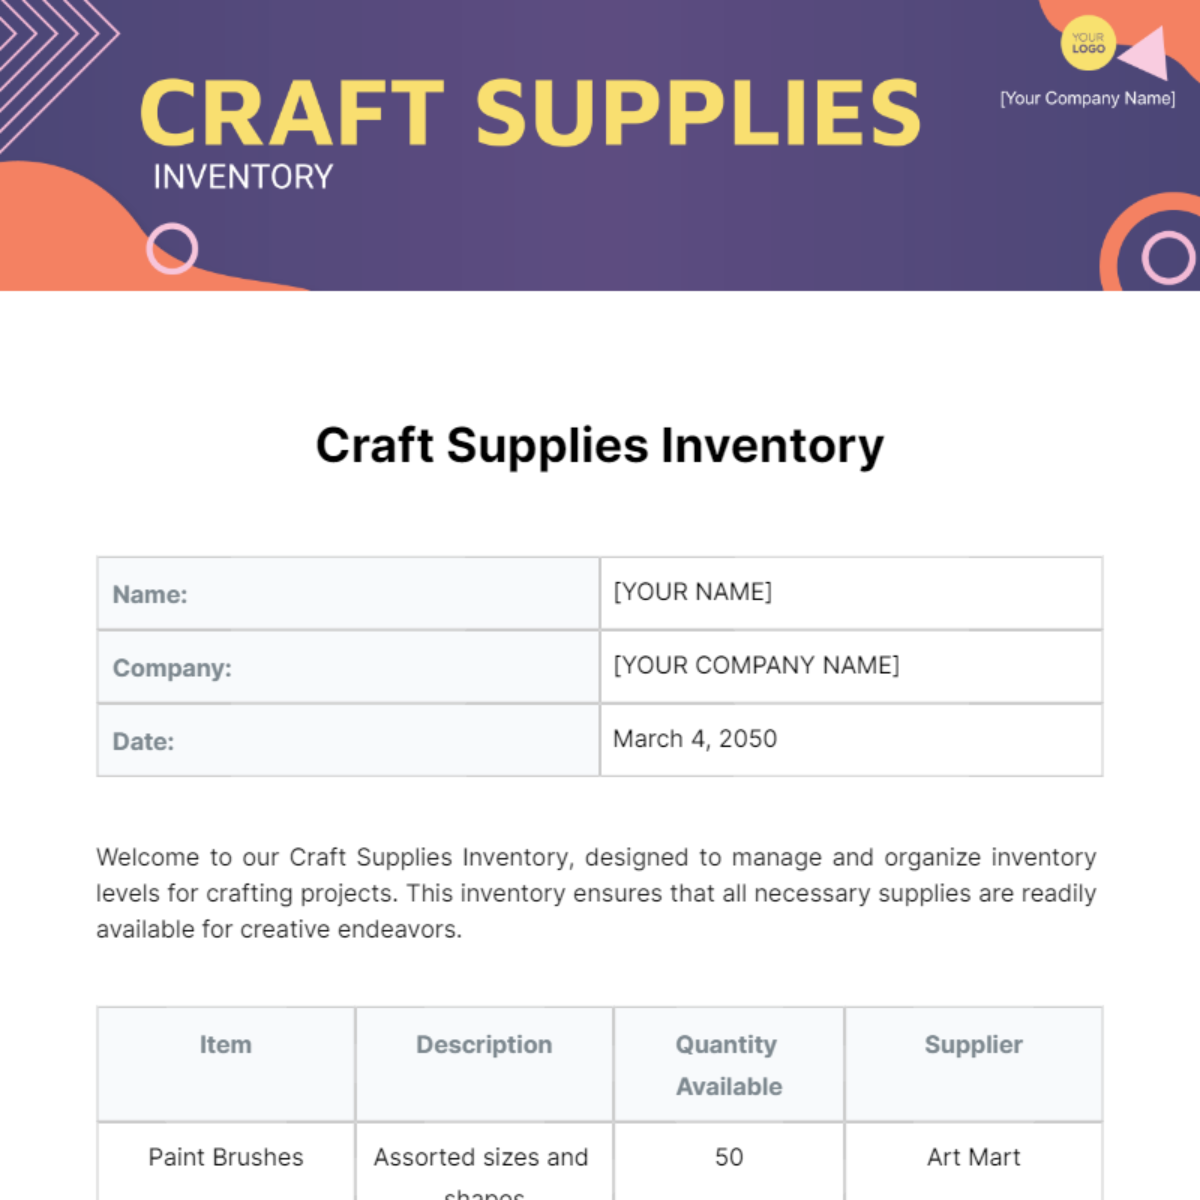 Craft Supplies Inventory Template